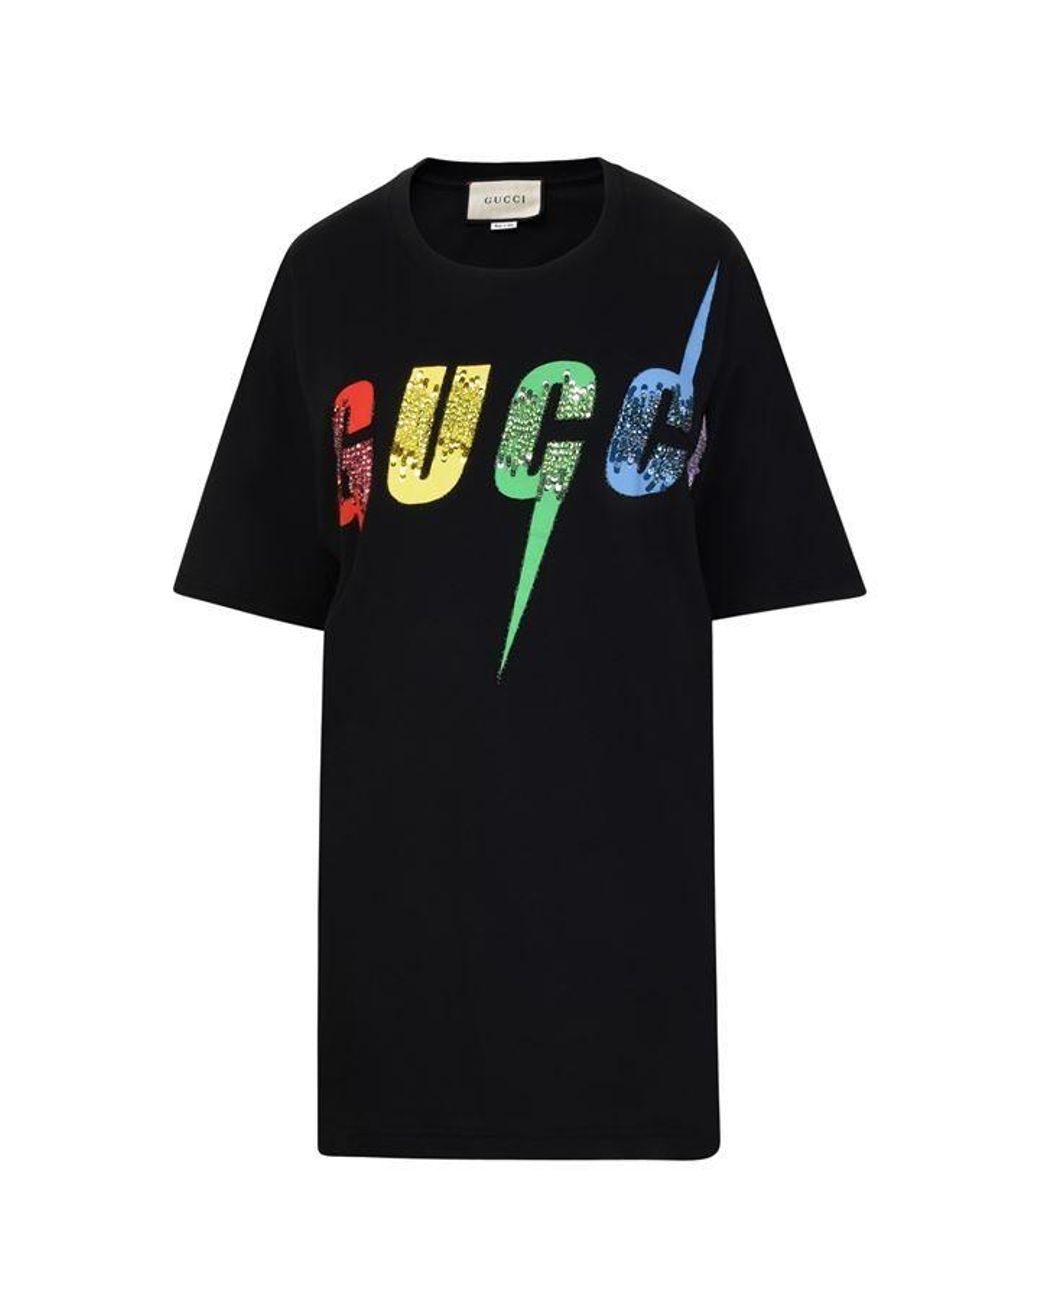 Gucci Blade Print T Shirt in Black - Save 13% - Lyst